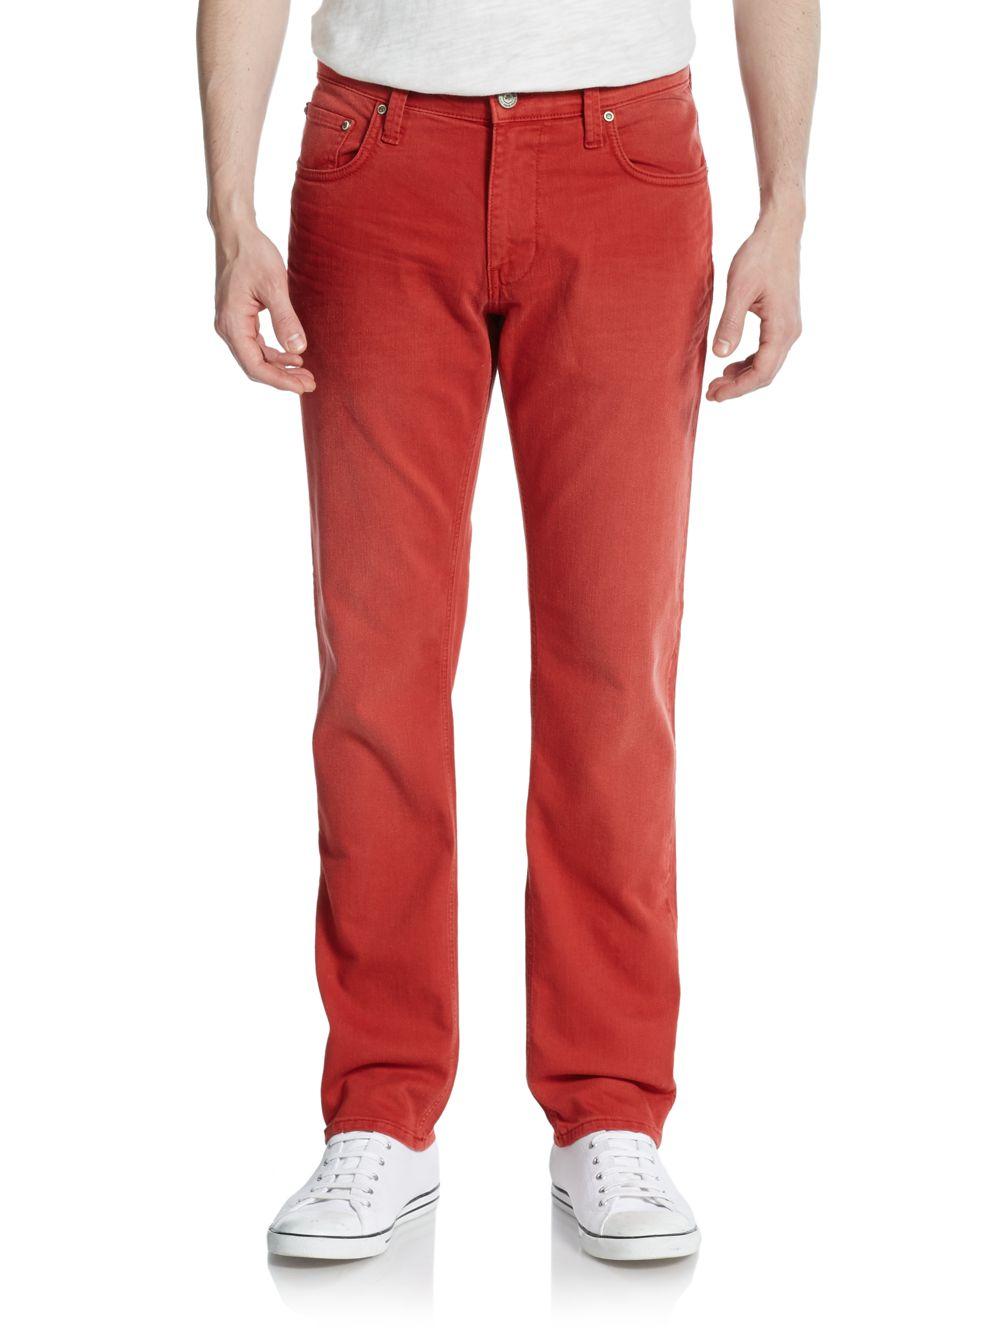 Lyst - Mavi Jeans Jake Slim-leg Colored Jeans in Red for Men